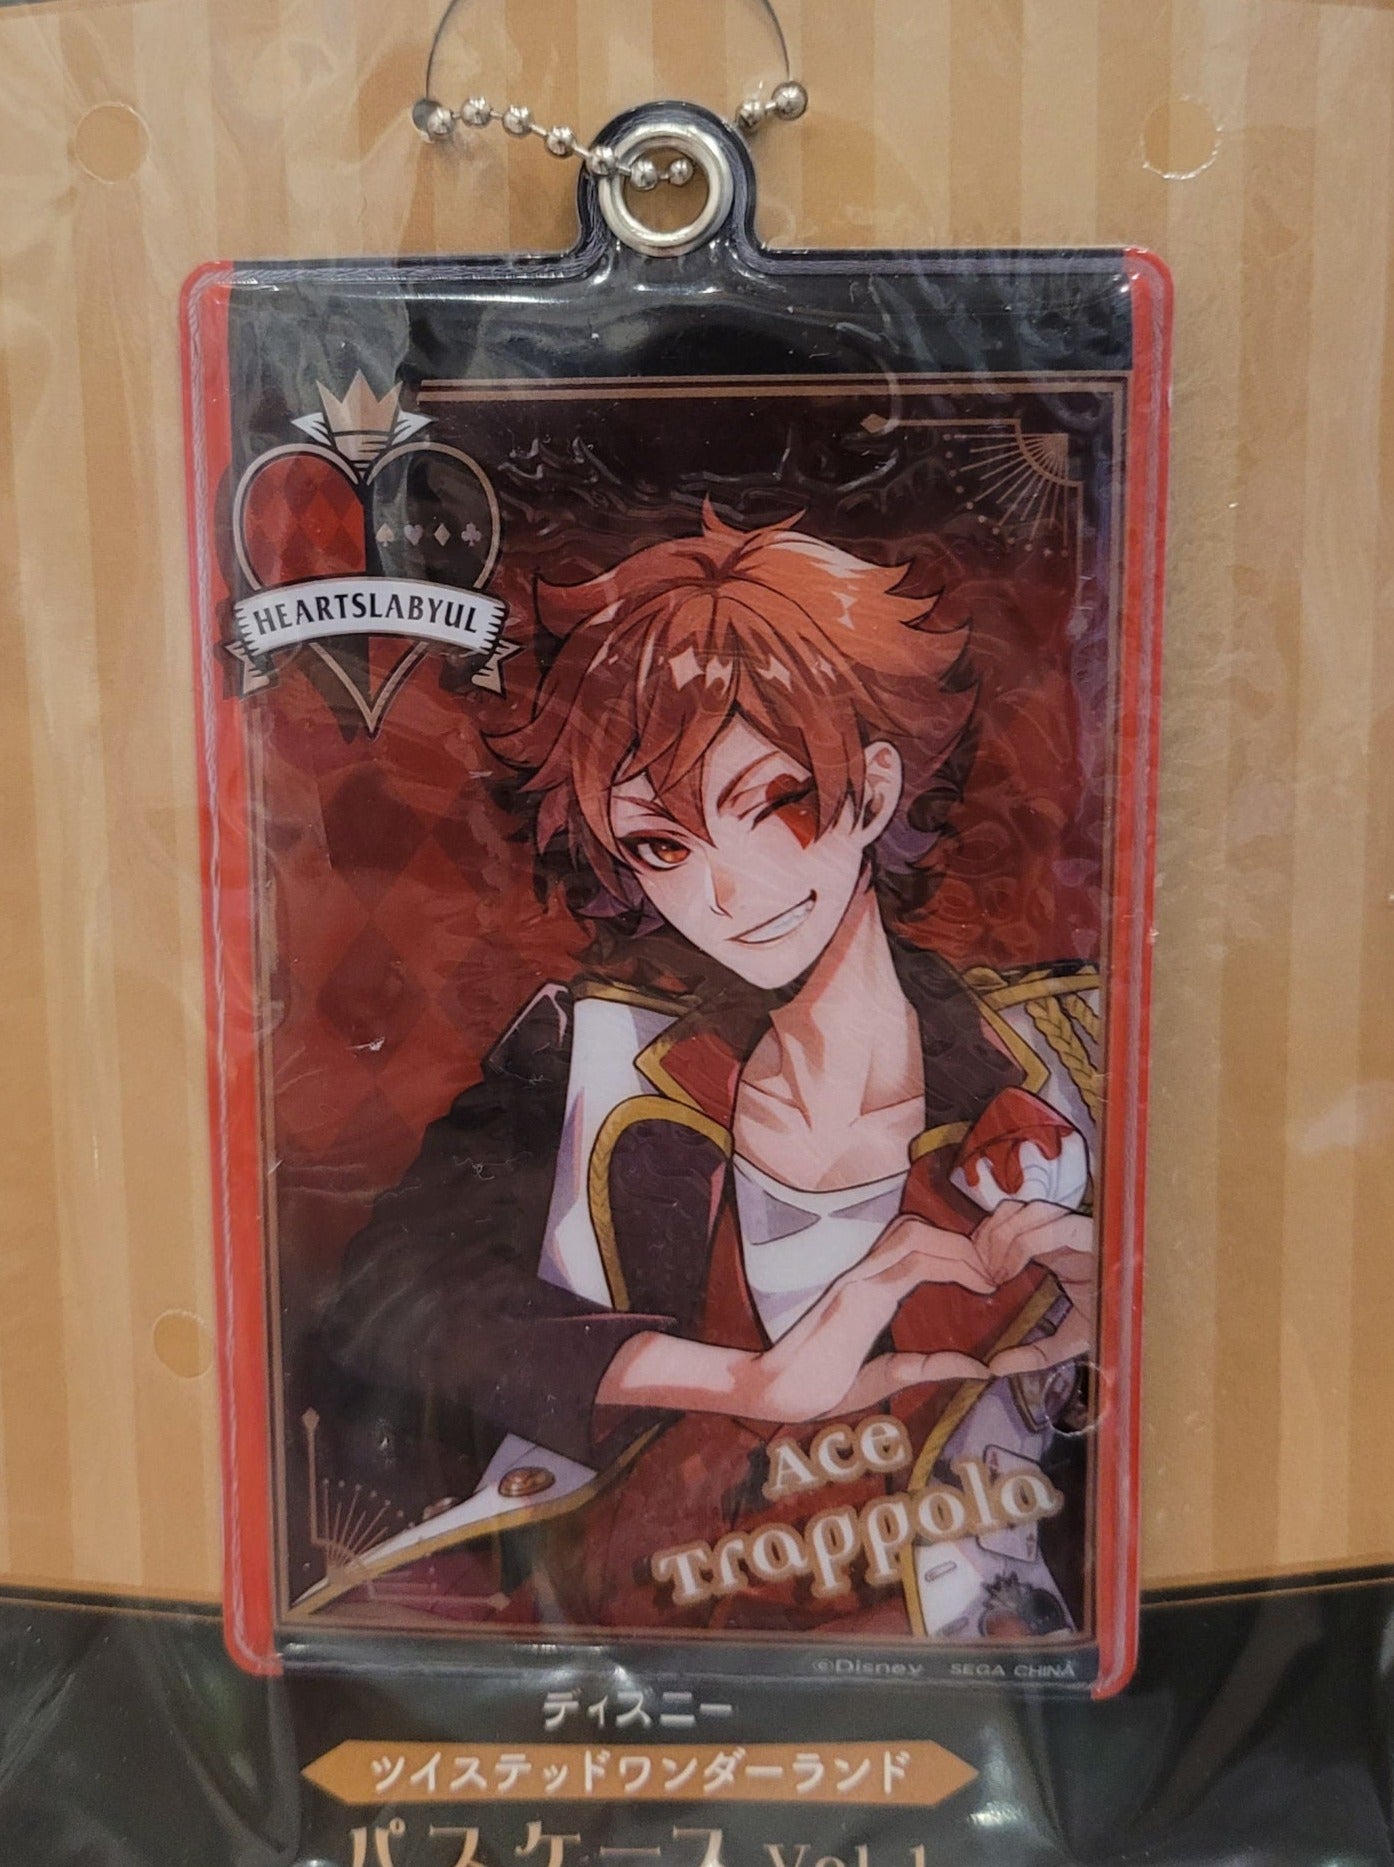 Twisted Wonderland Ace Trappola Card Case Anhänger Nippon4U